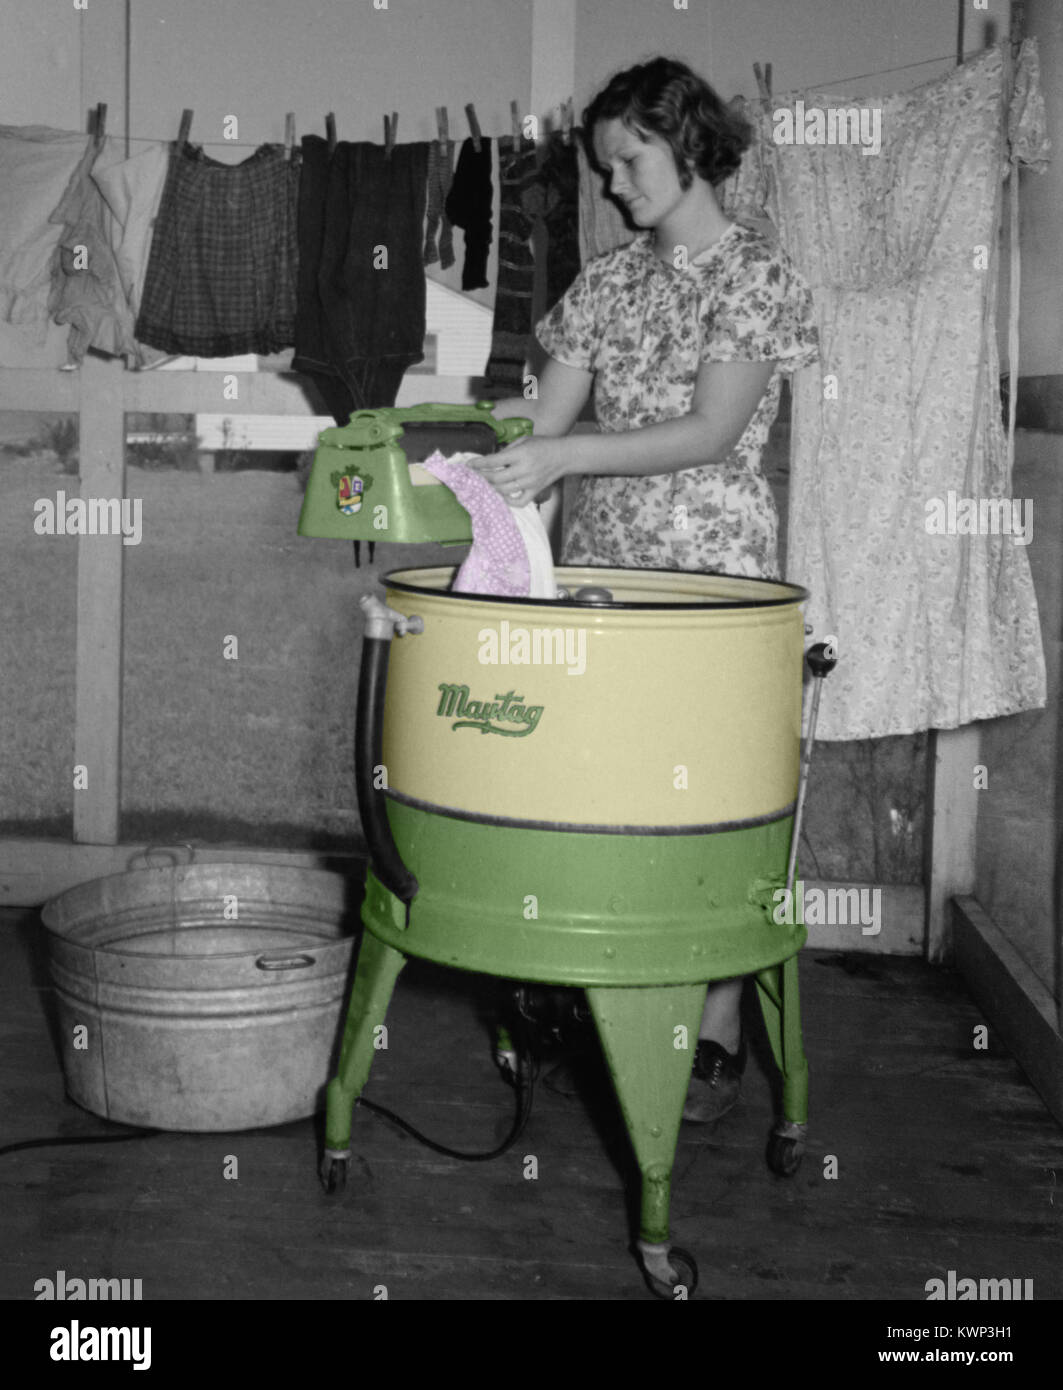 Antique washing machine wringer hi-res stock photography and images - Alamy